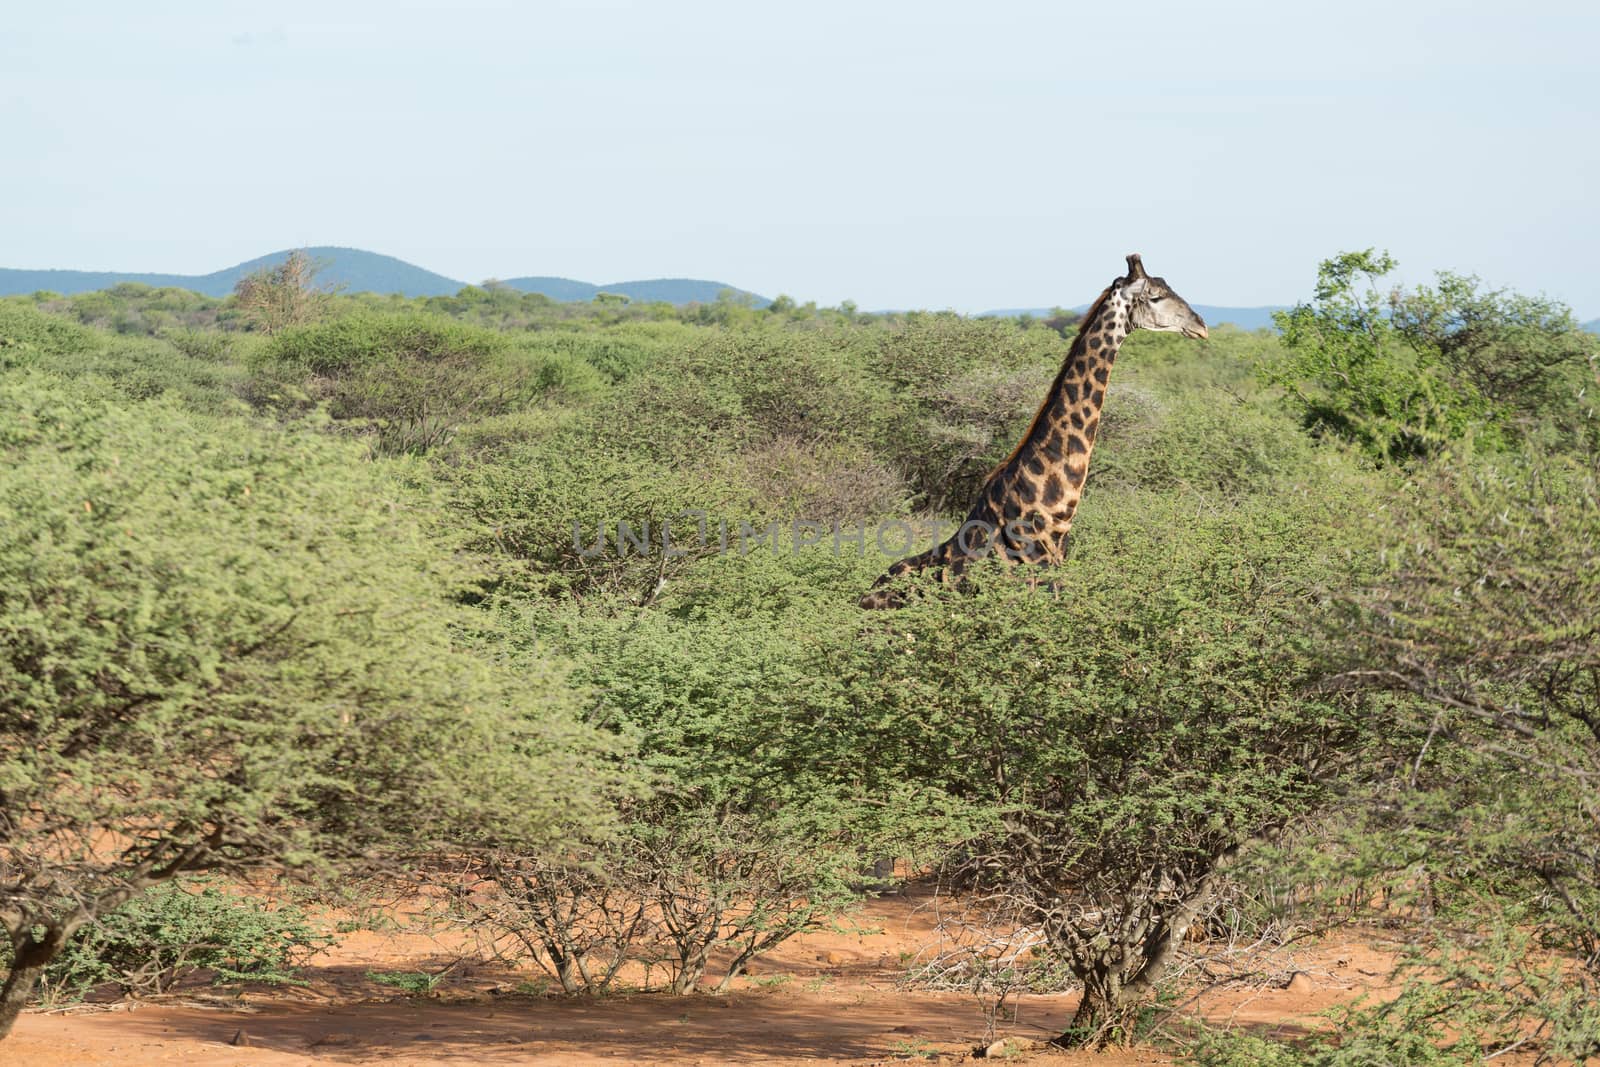 Giraffe in the wild by derejeb